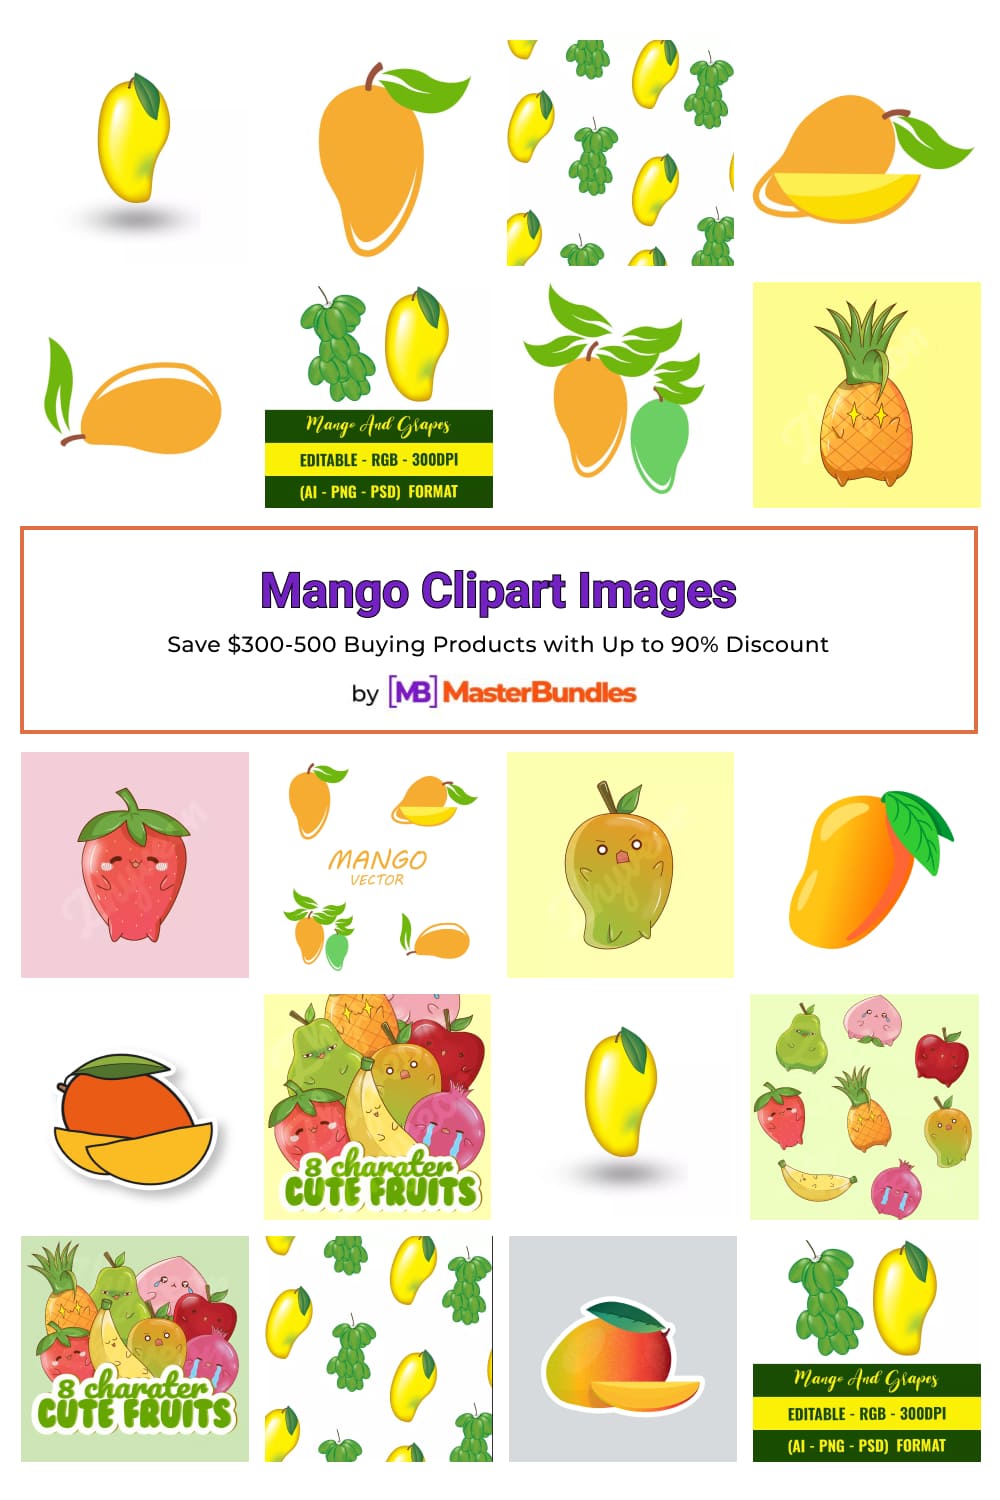 Mango Clipart Images Pinterest image.